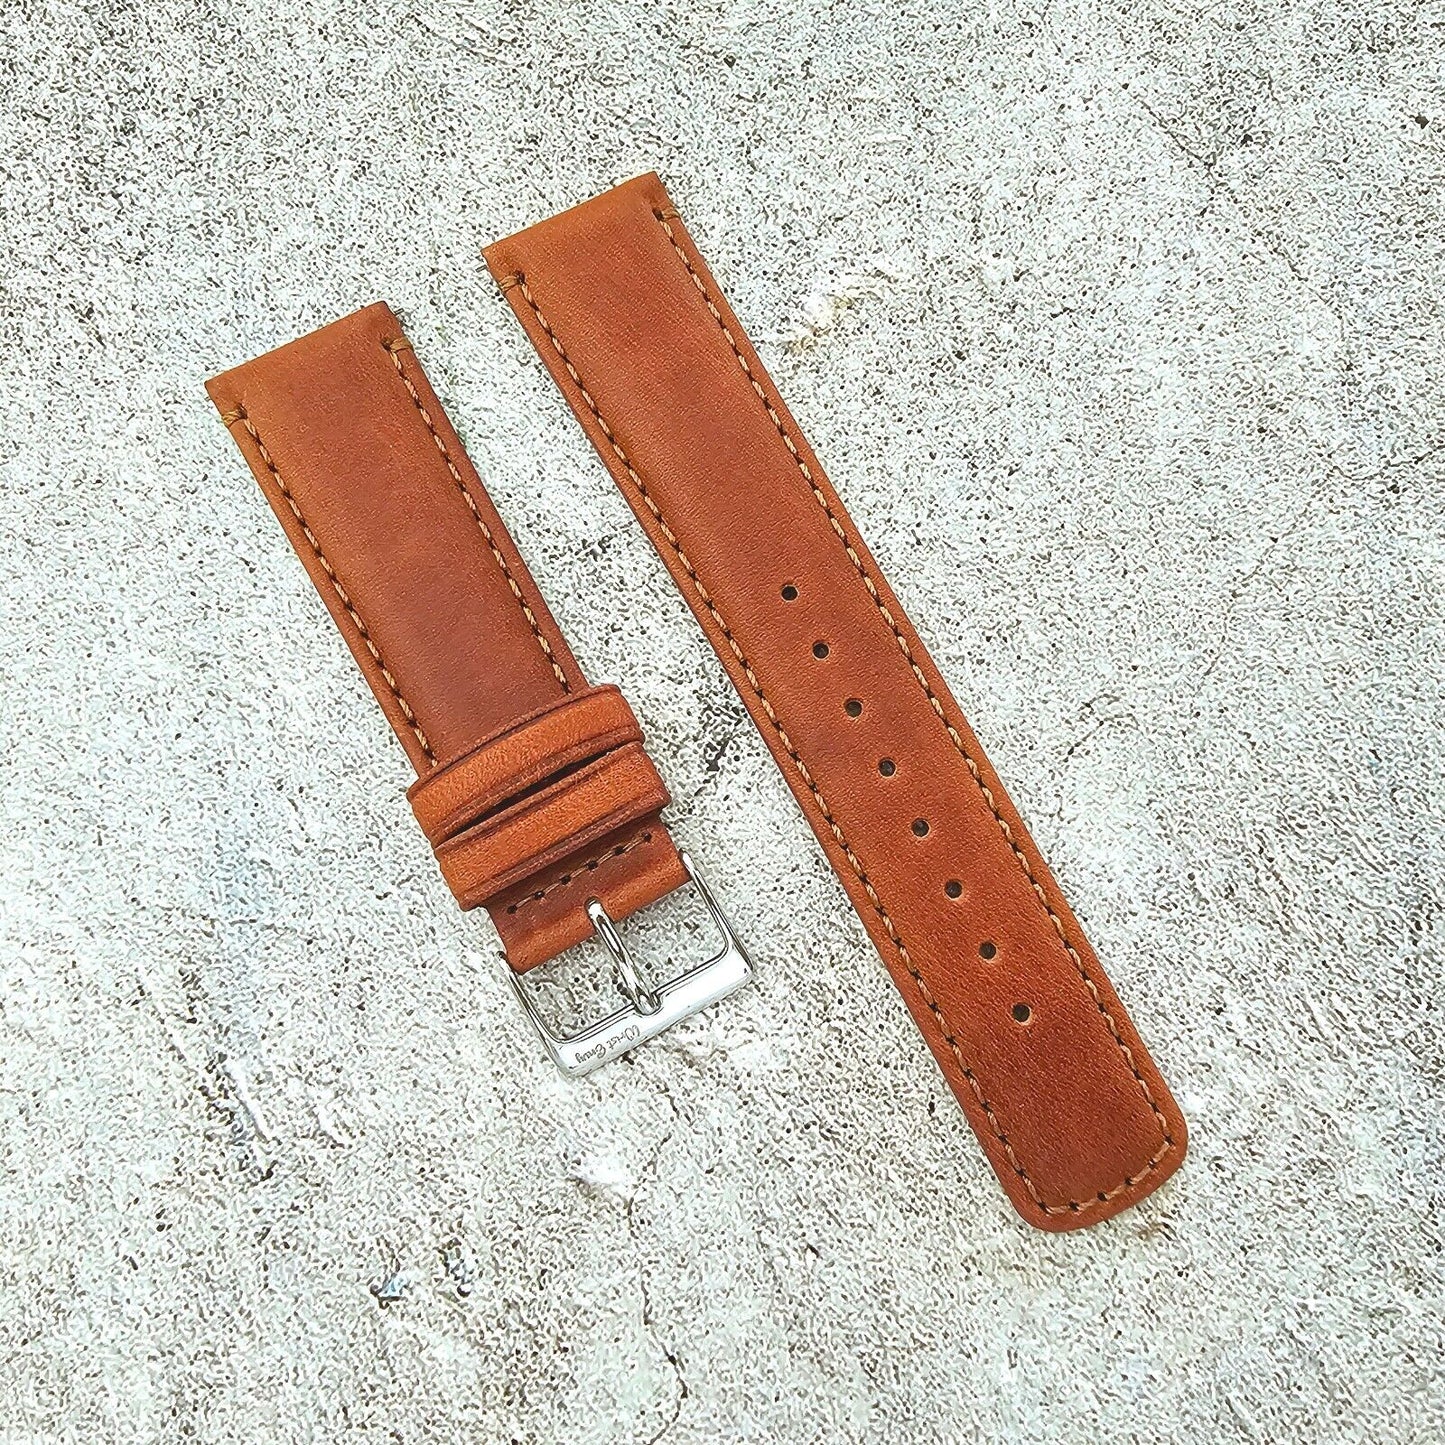 Horween Dublin Leather Watch Strap 20mm 22mm Chestnut Brown